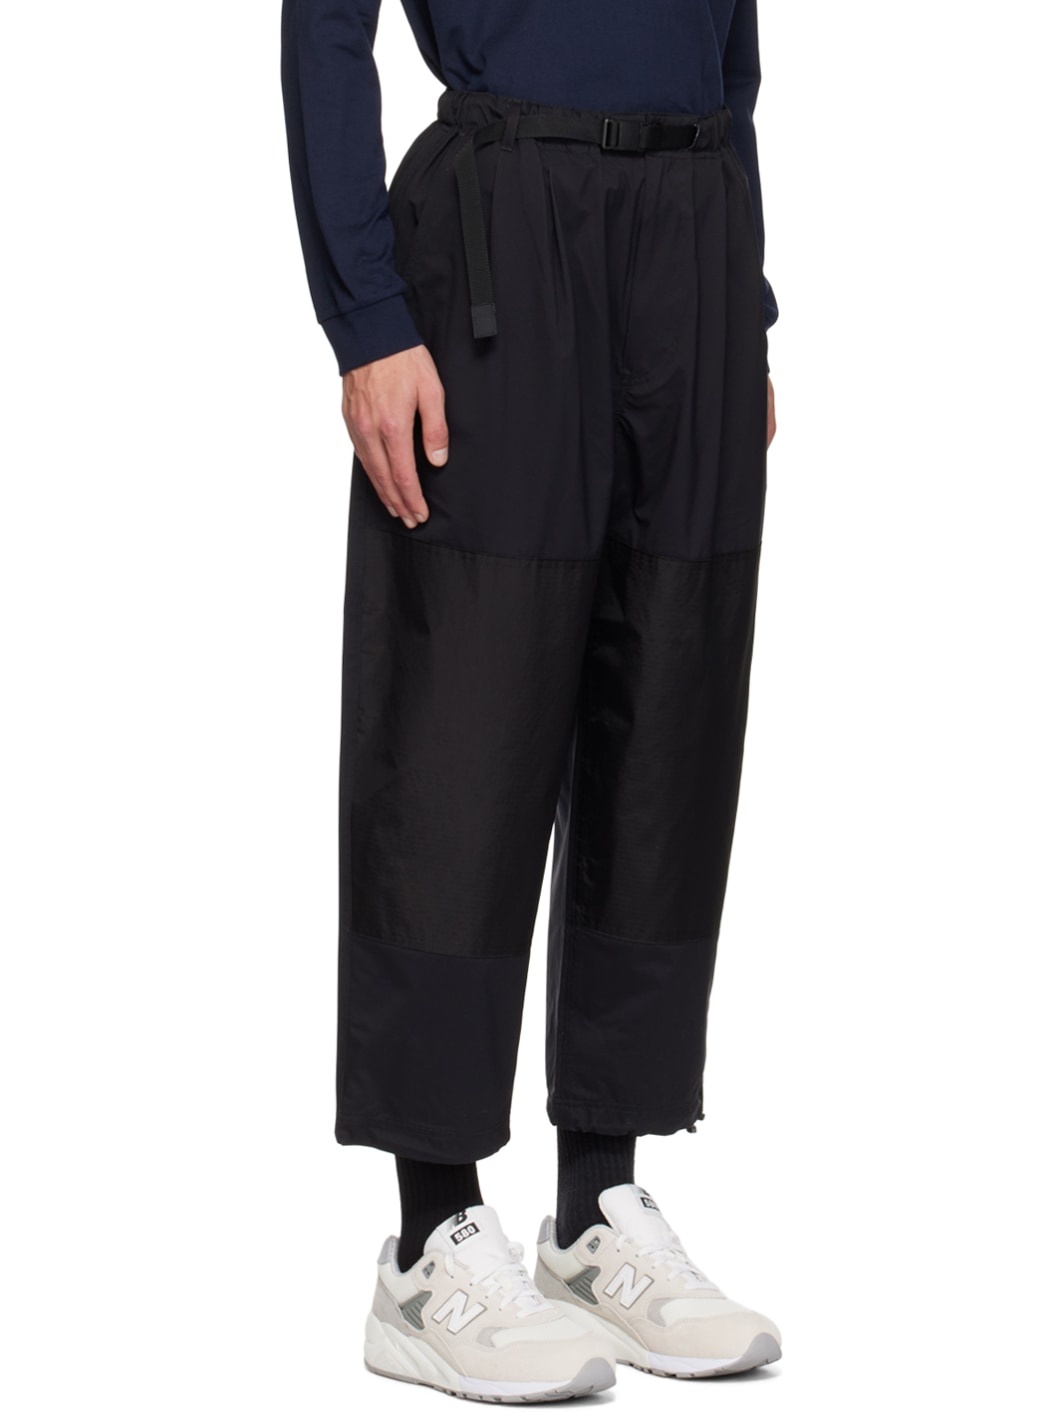 Black Paneled Trousers - 2